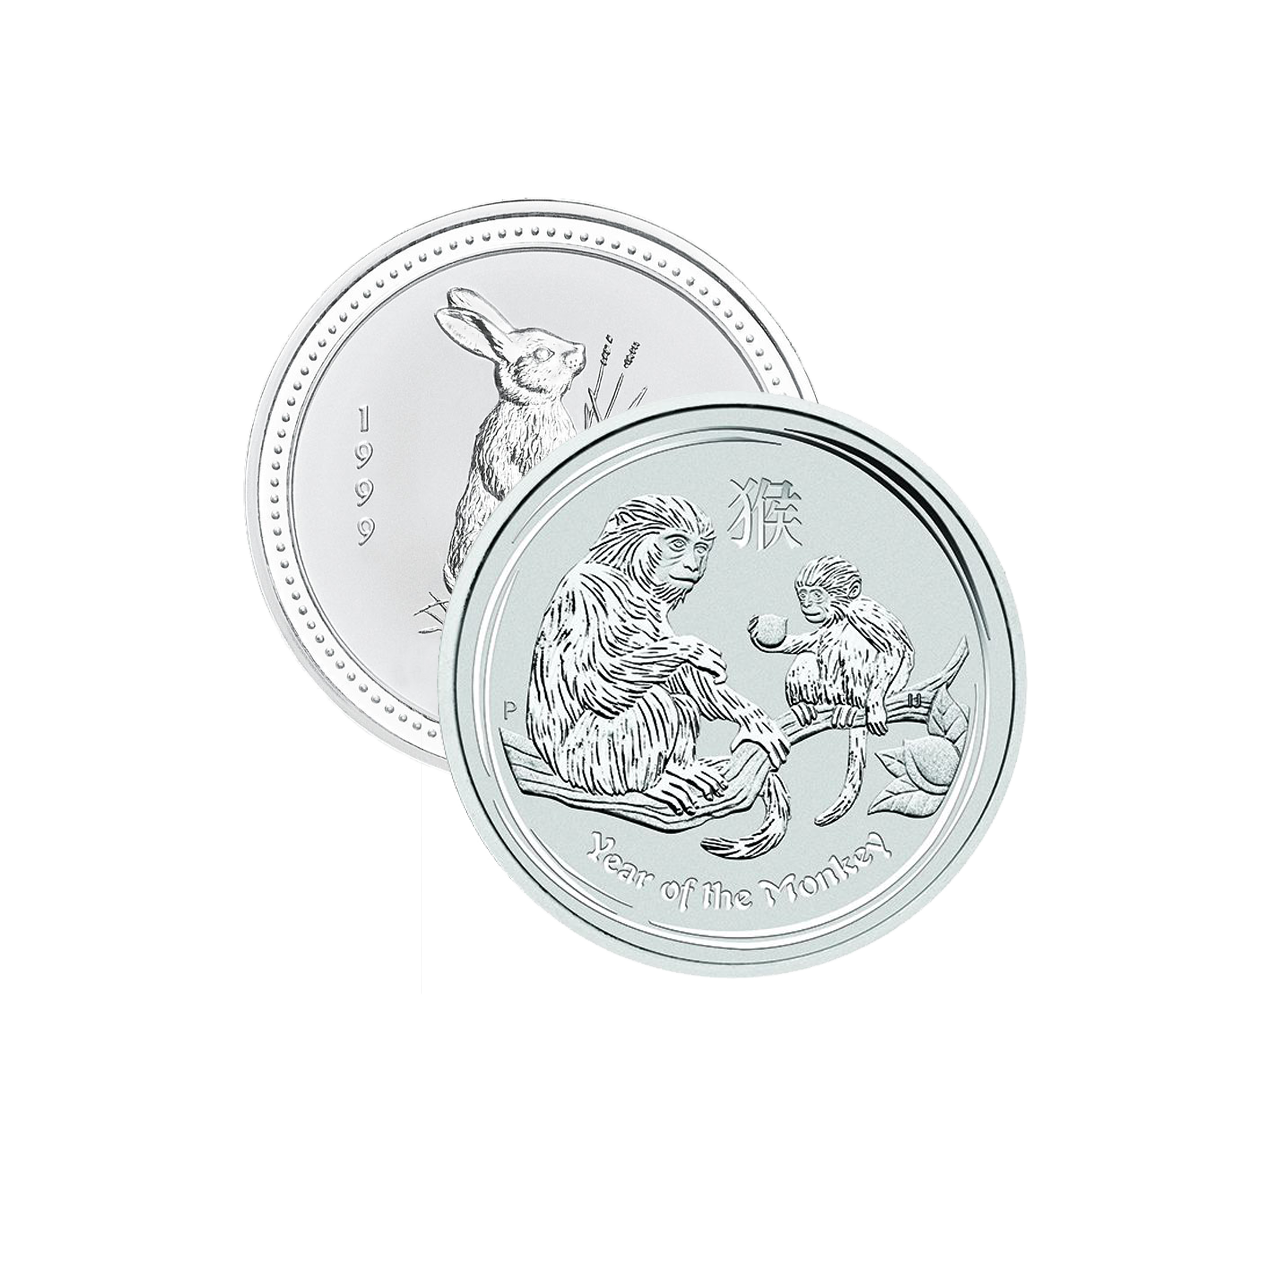 Lunar "all motifs" - Australia 1 kg silver